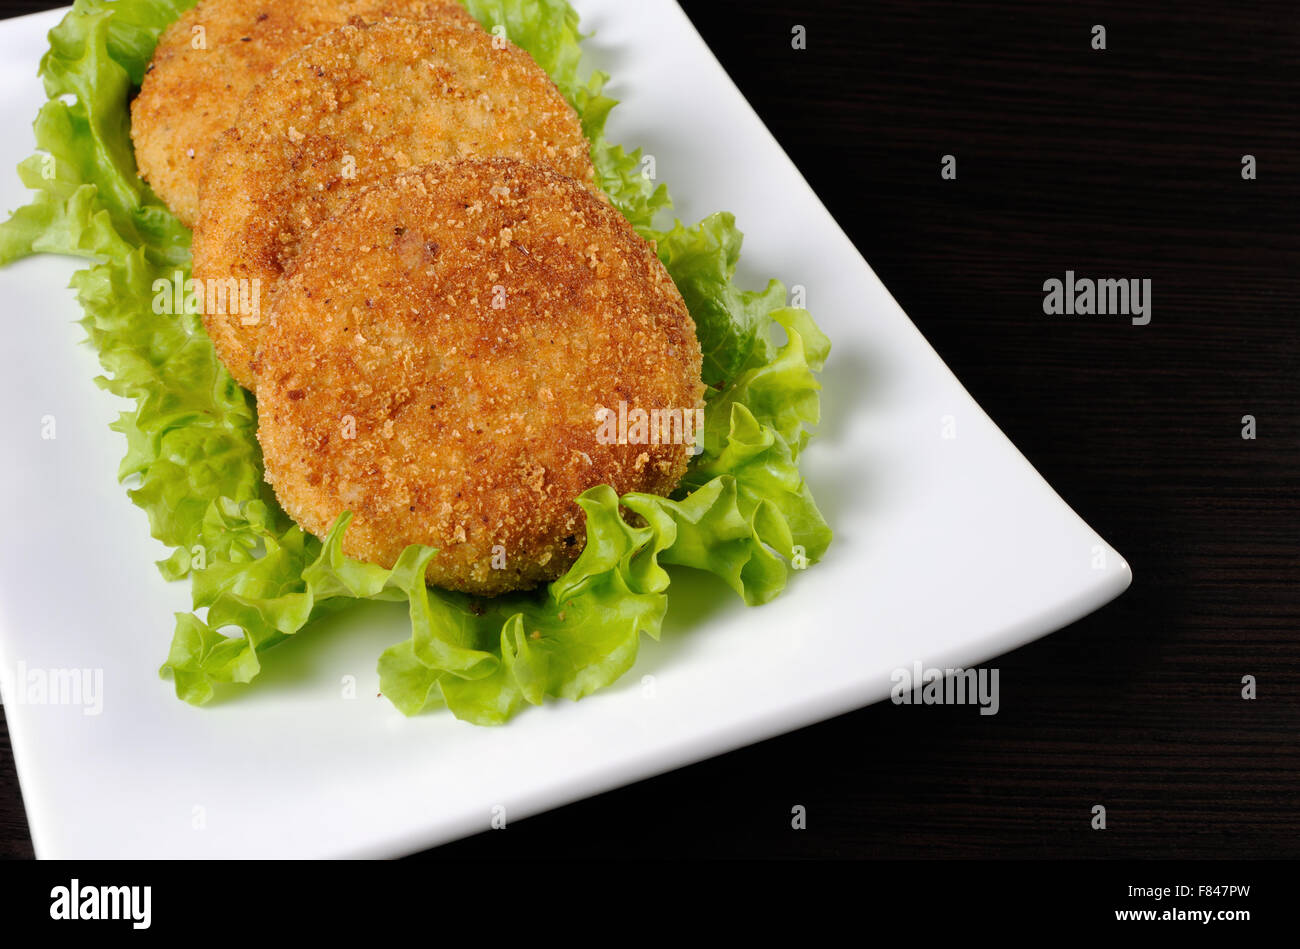 Chicken cutlet breaded in lettuce leaves Stock Photo